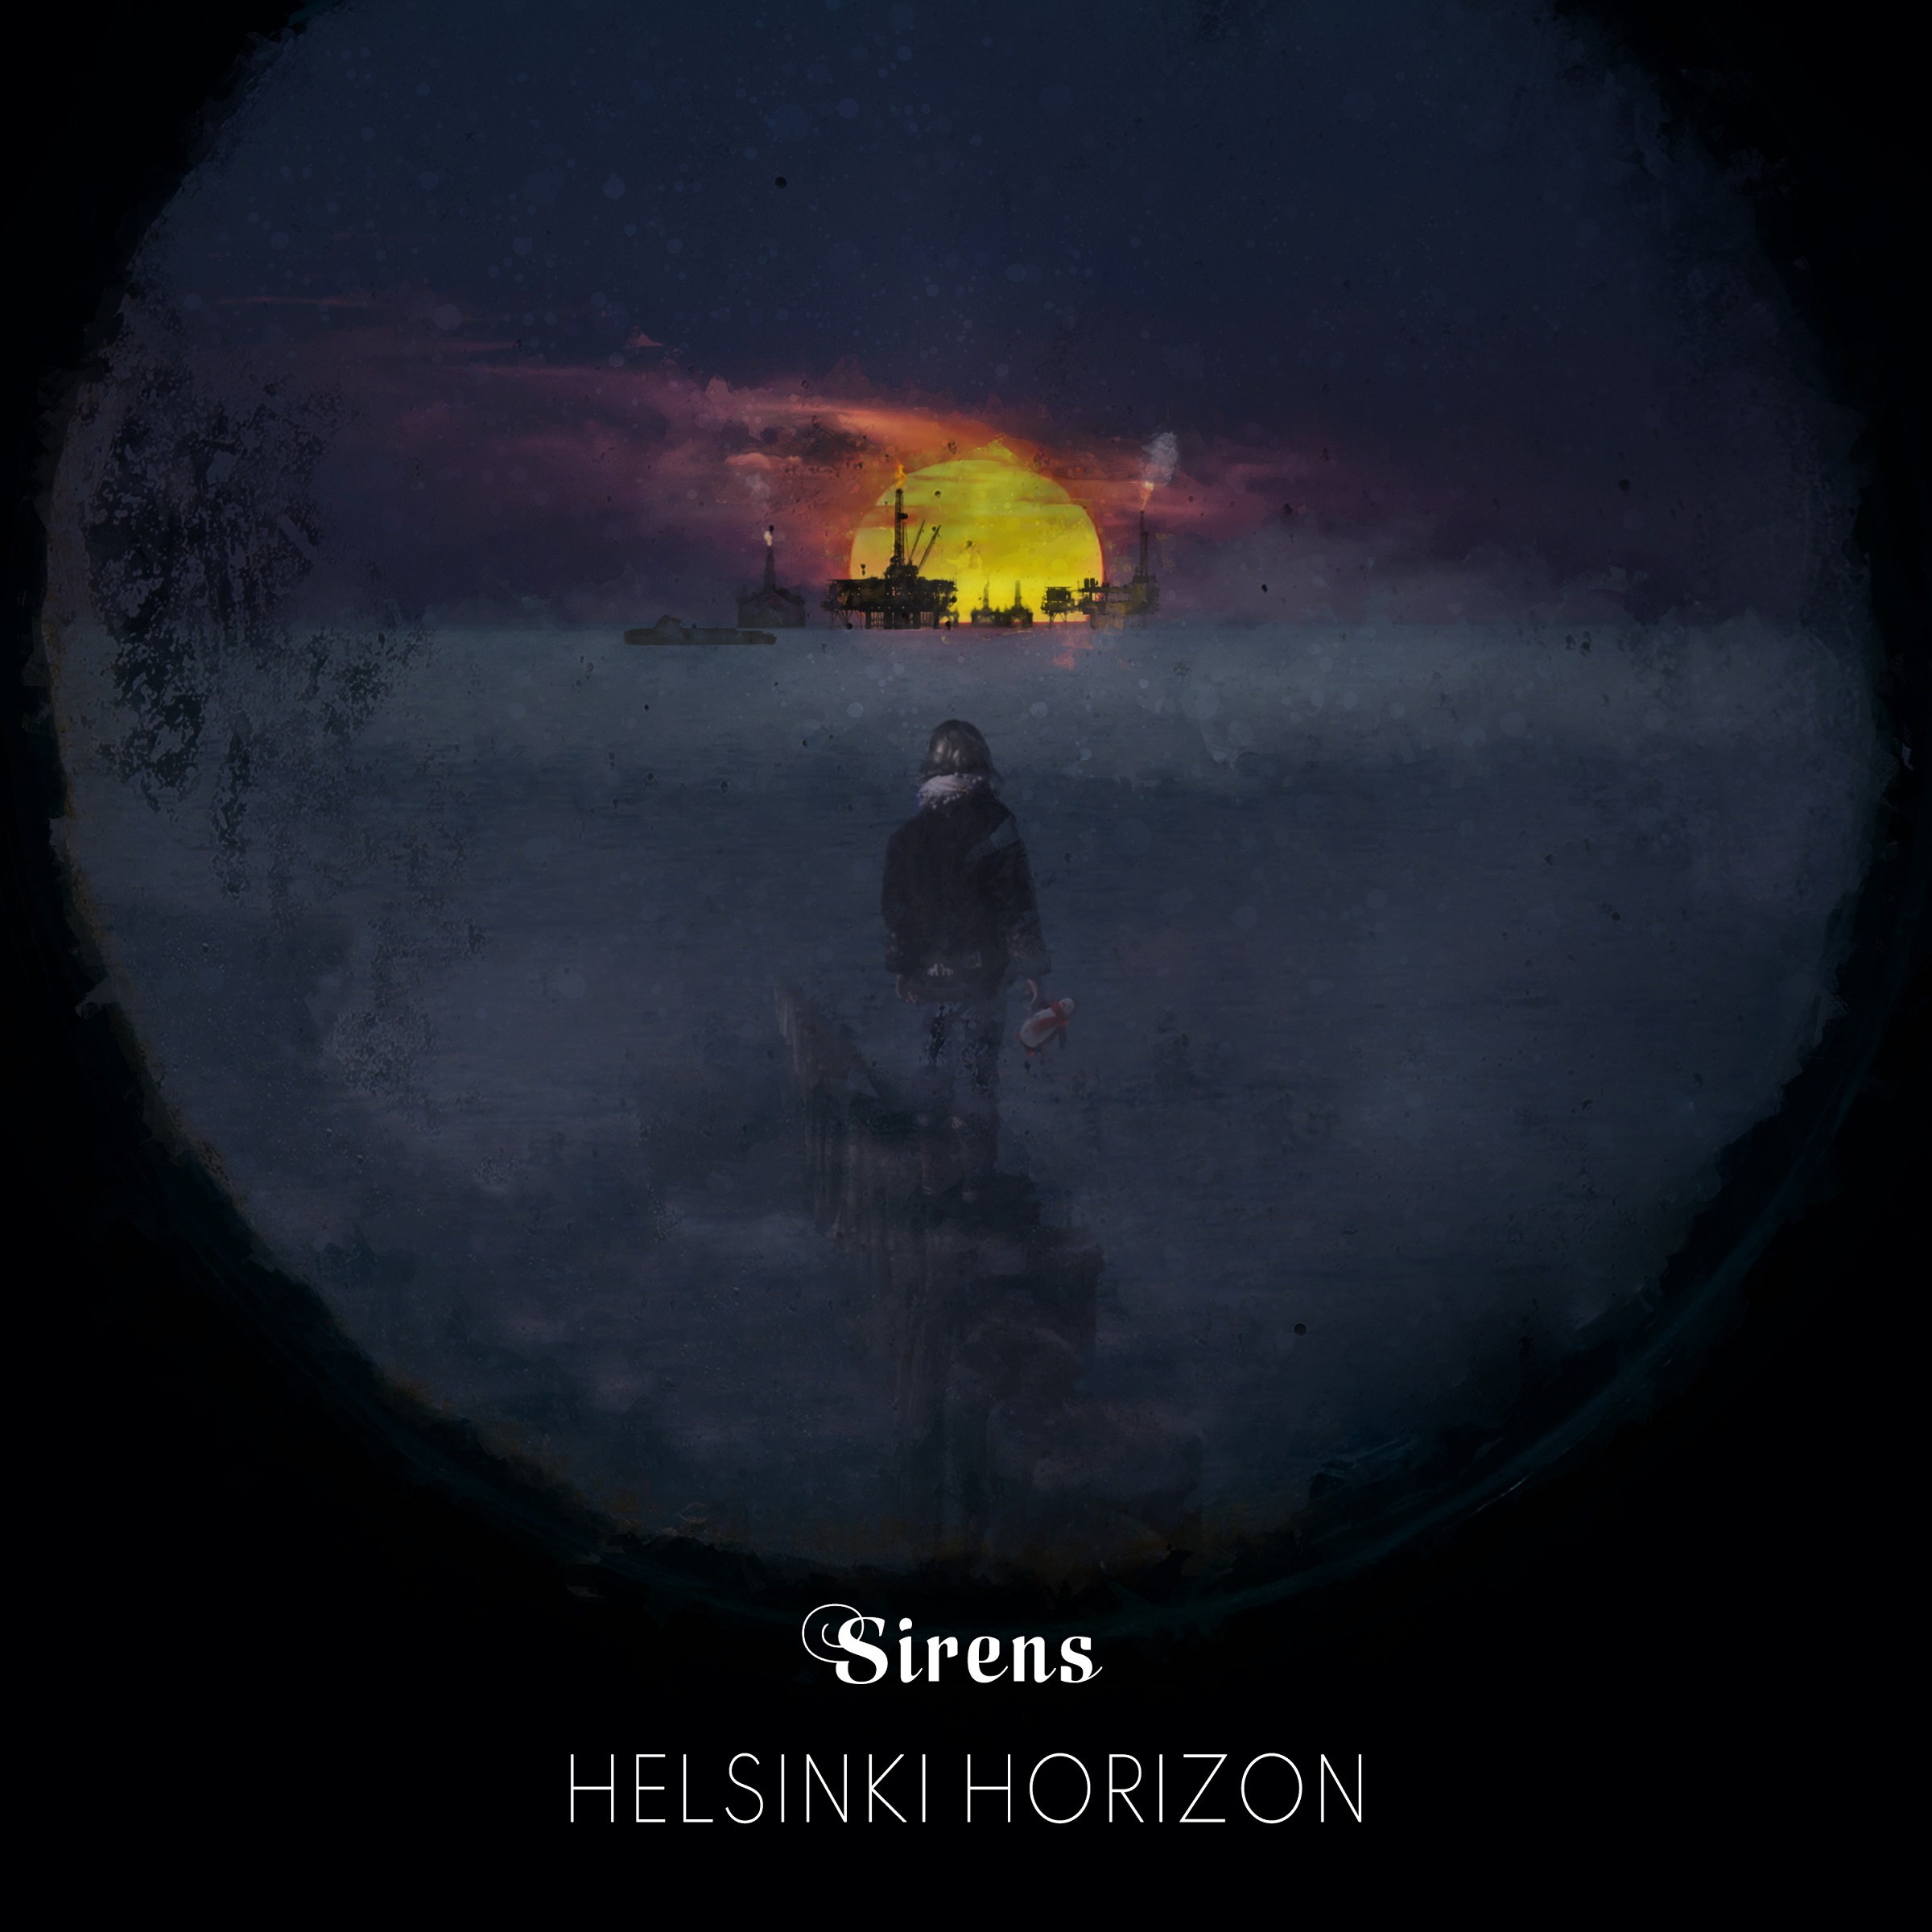 HELSINKI HORIZON – Sirens